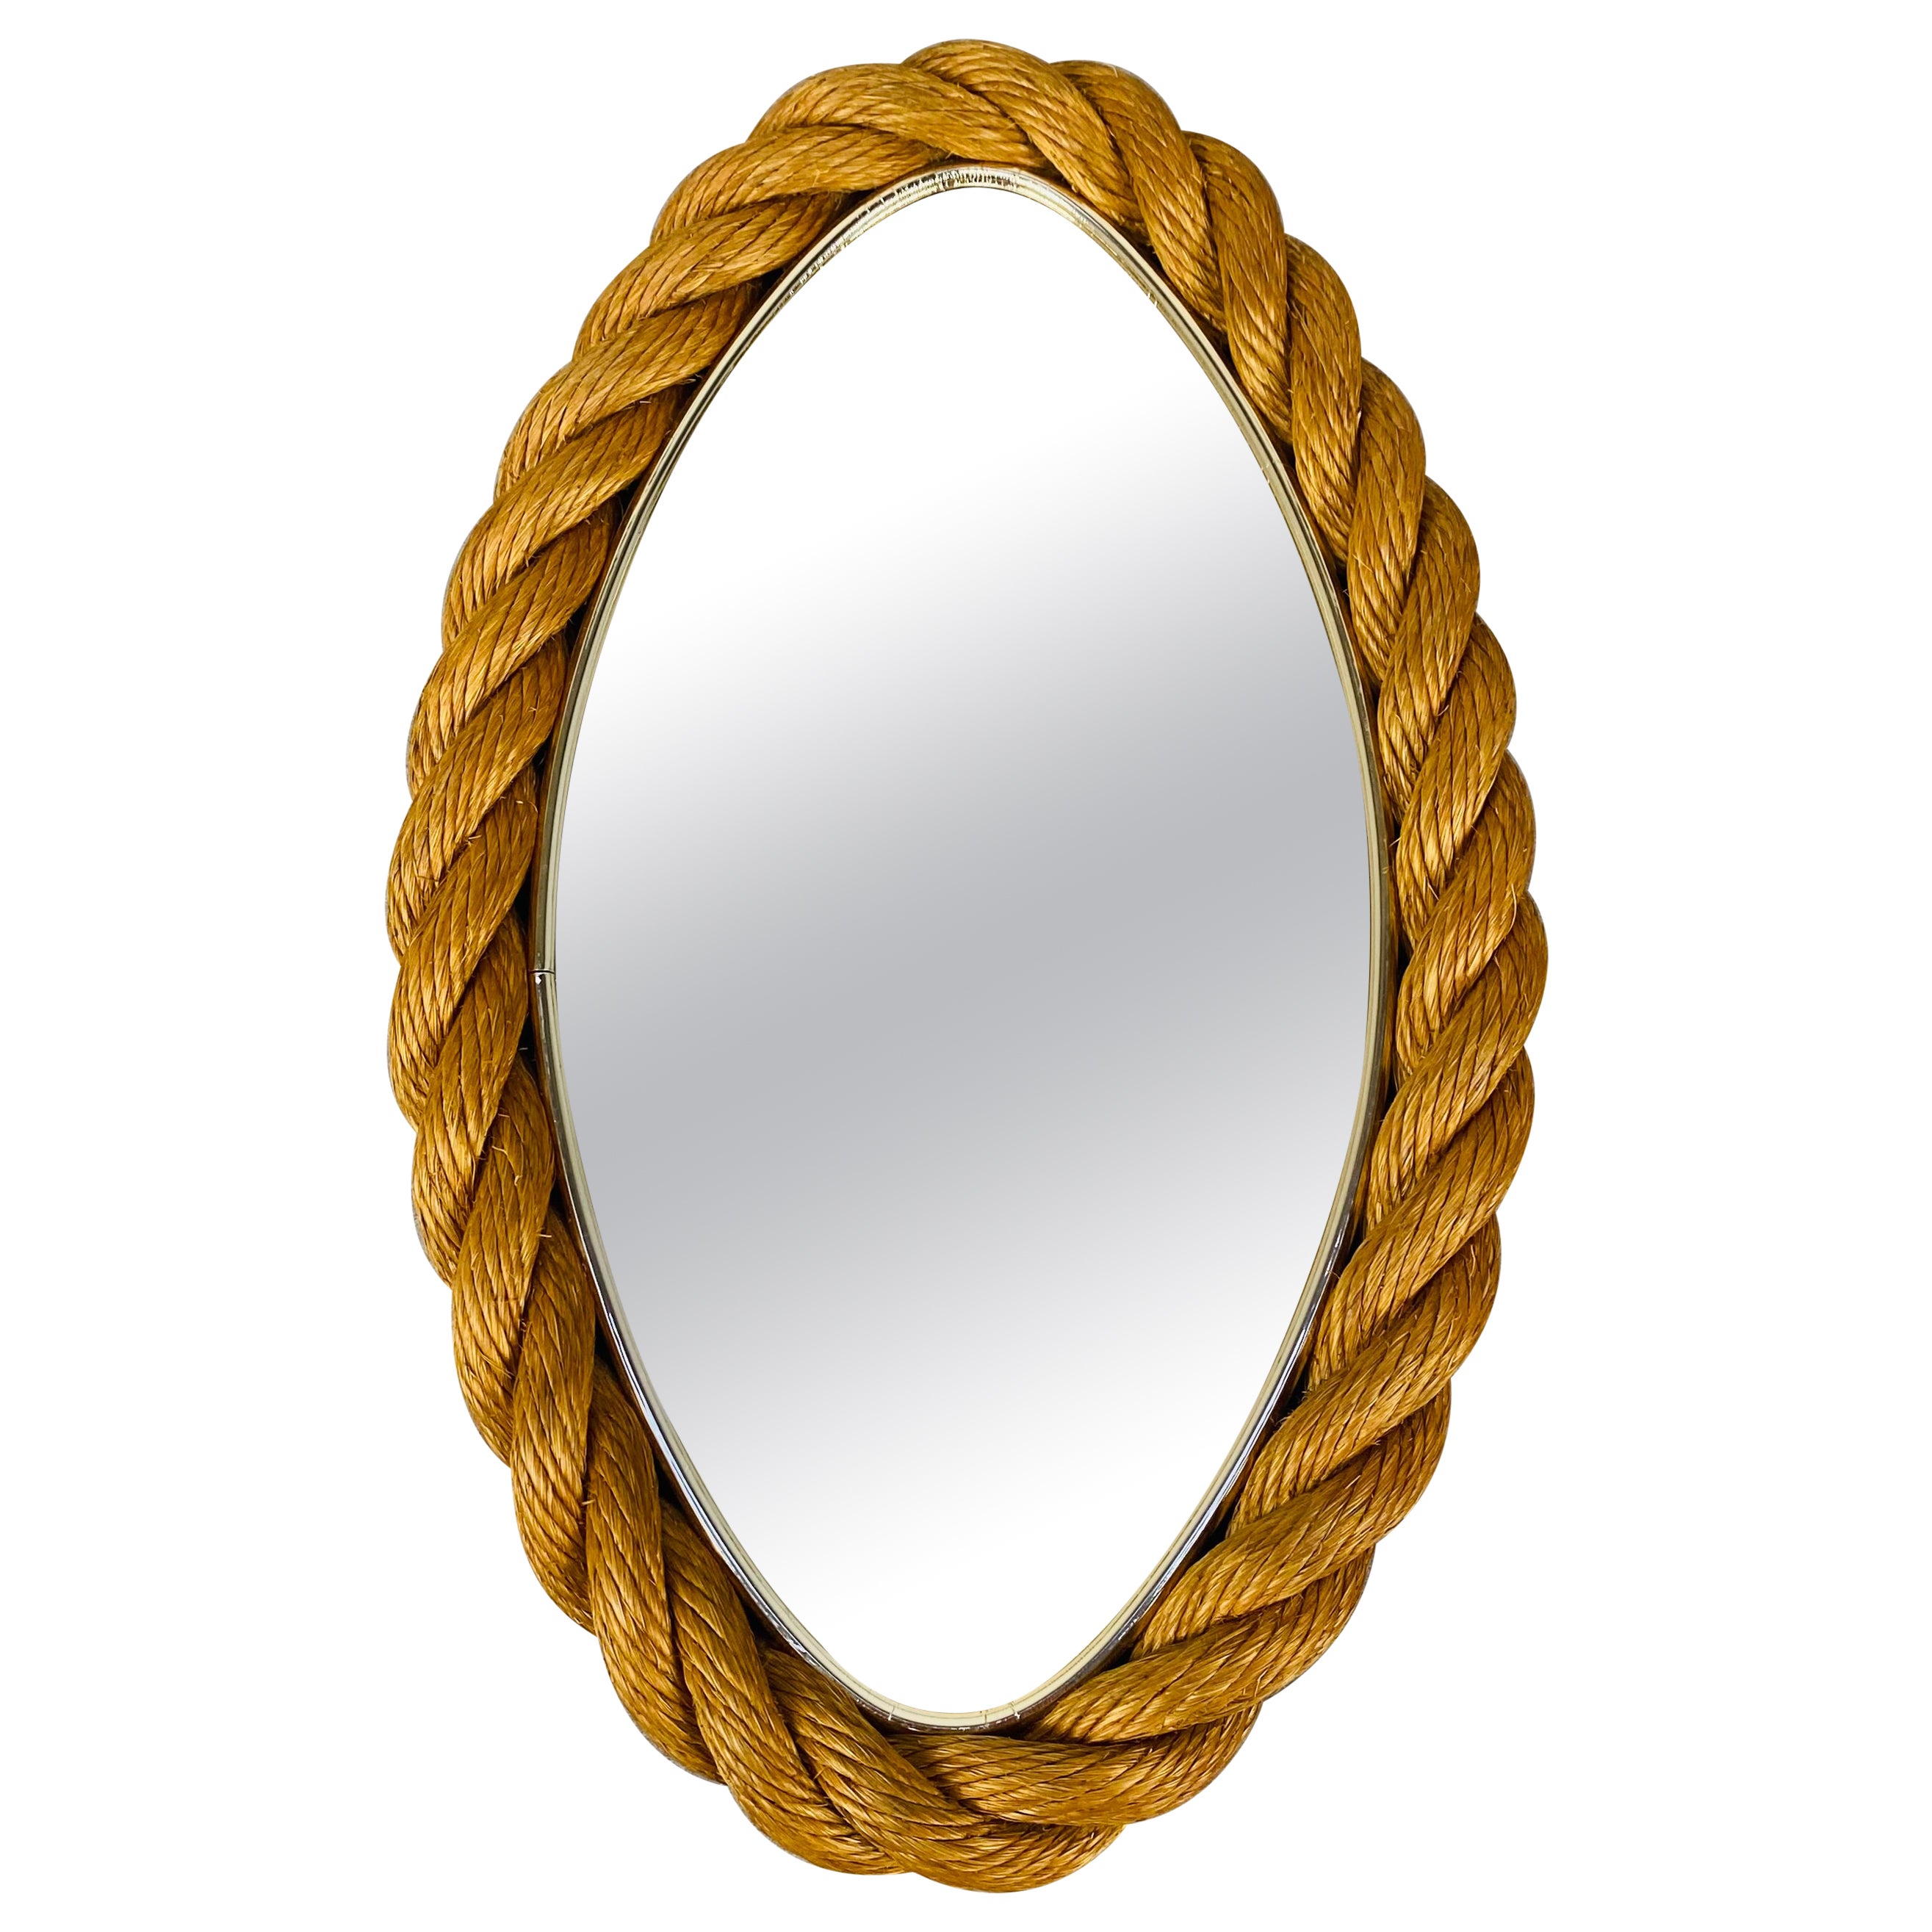 Audoux Minet rope mirror 